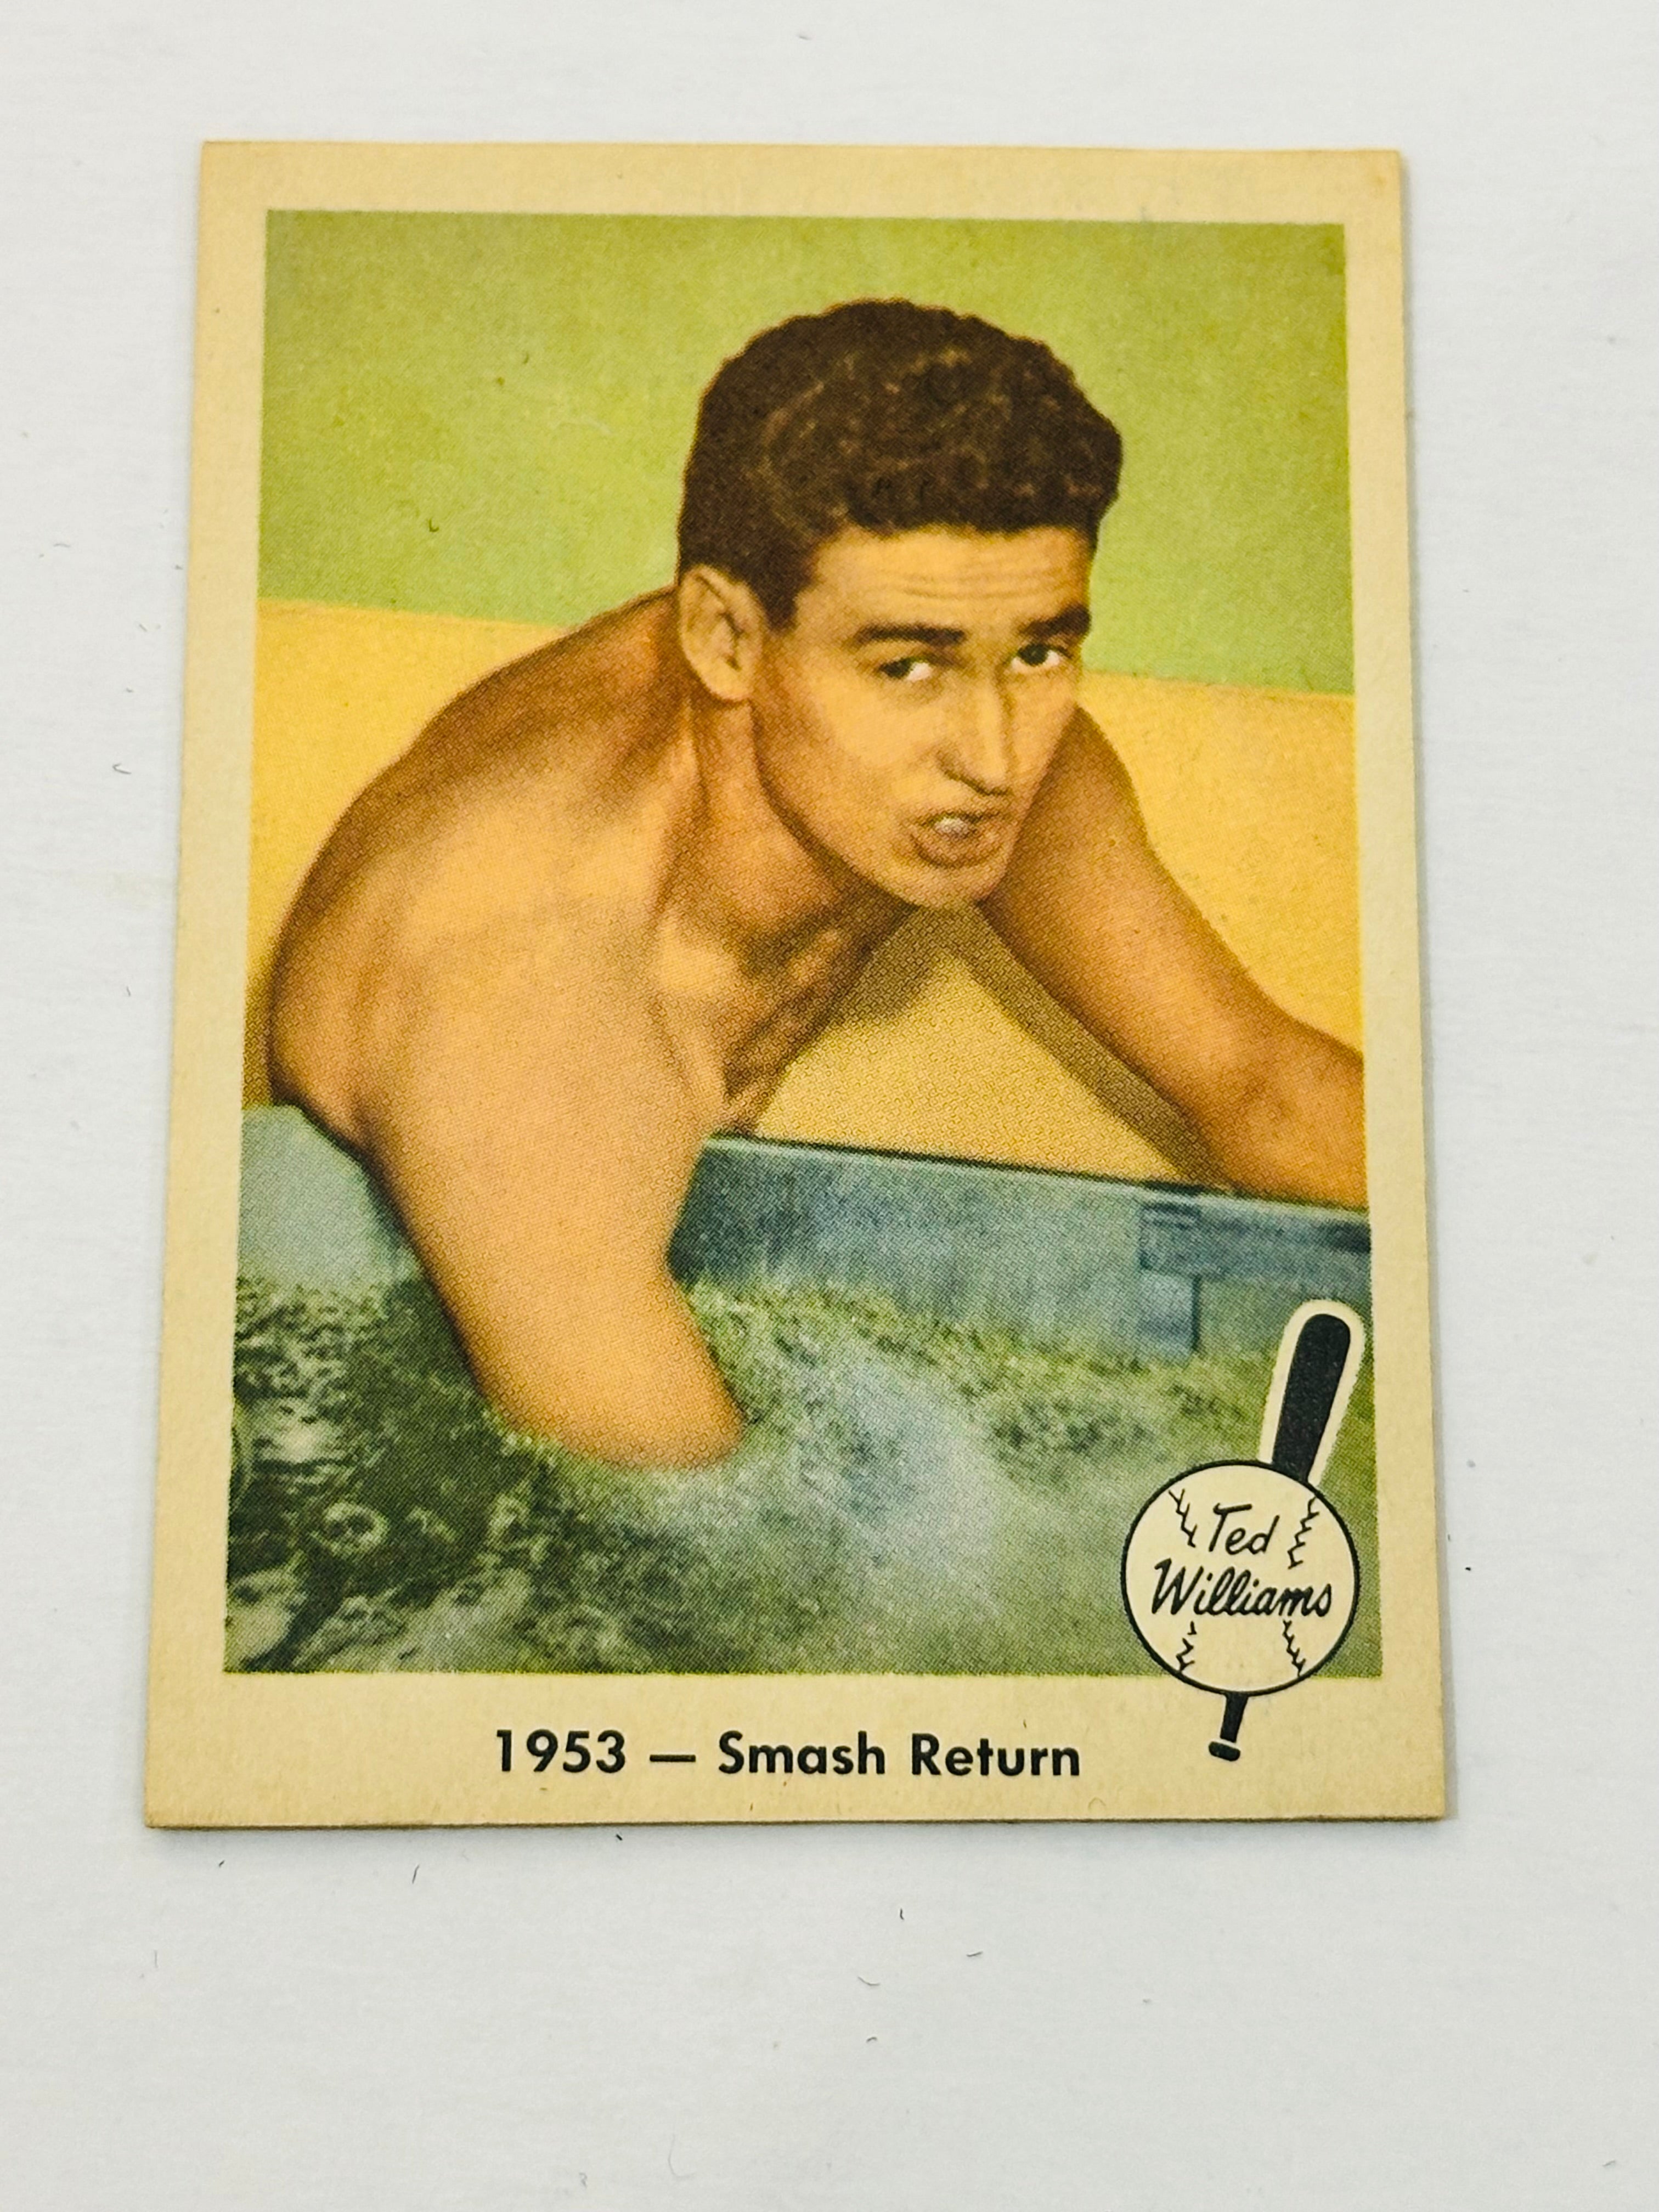 Ted Williams rare vintage baseball card 1959